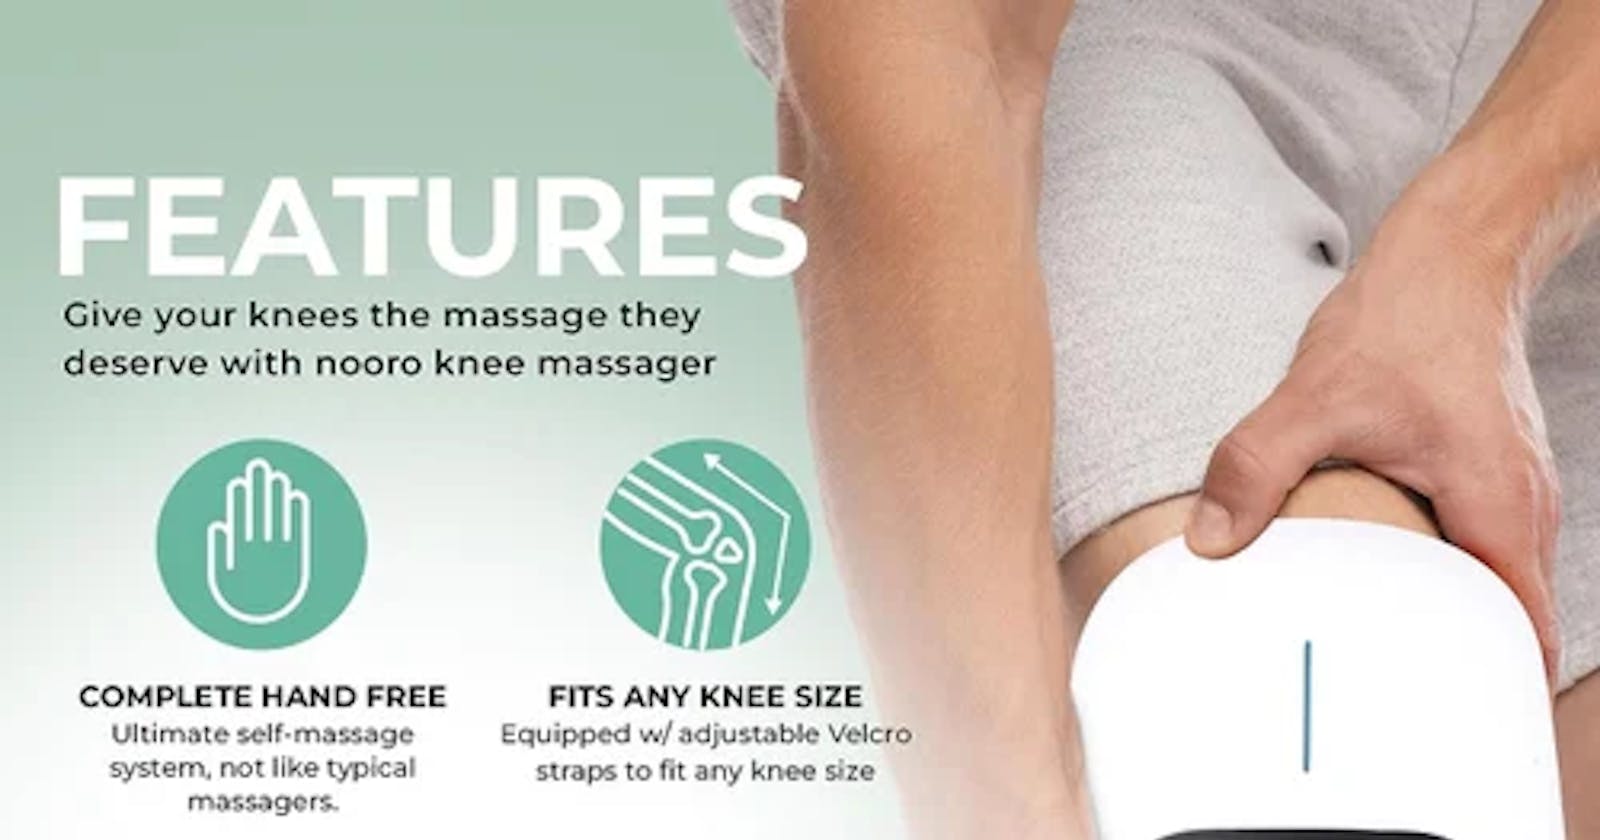 Nooro Knee Massager Review: Legit or Scam?